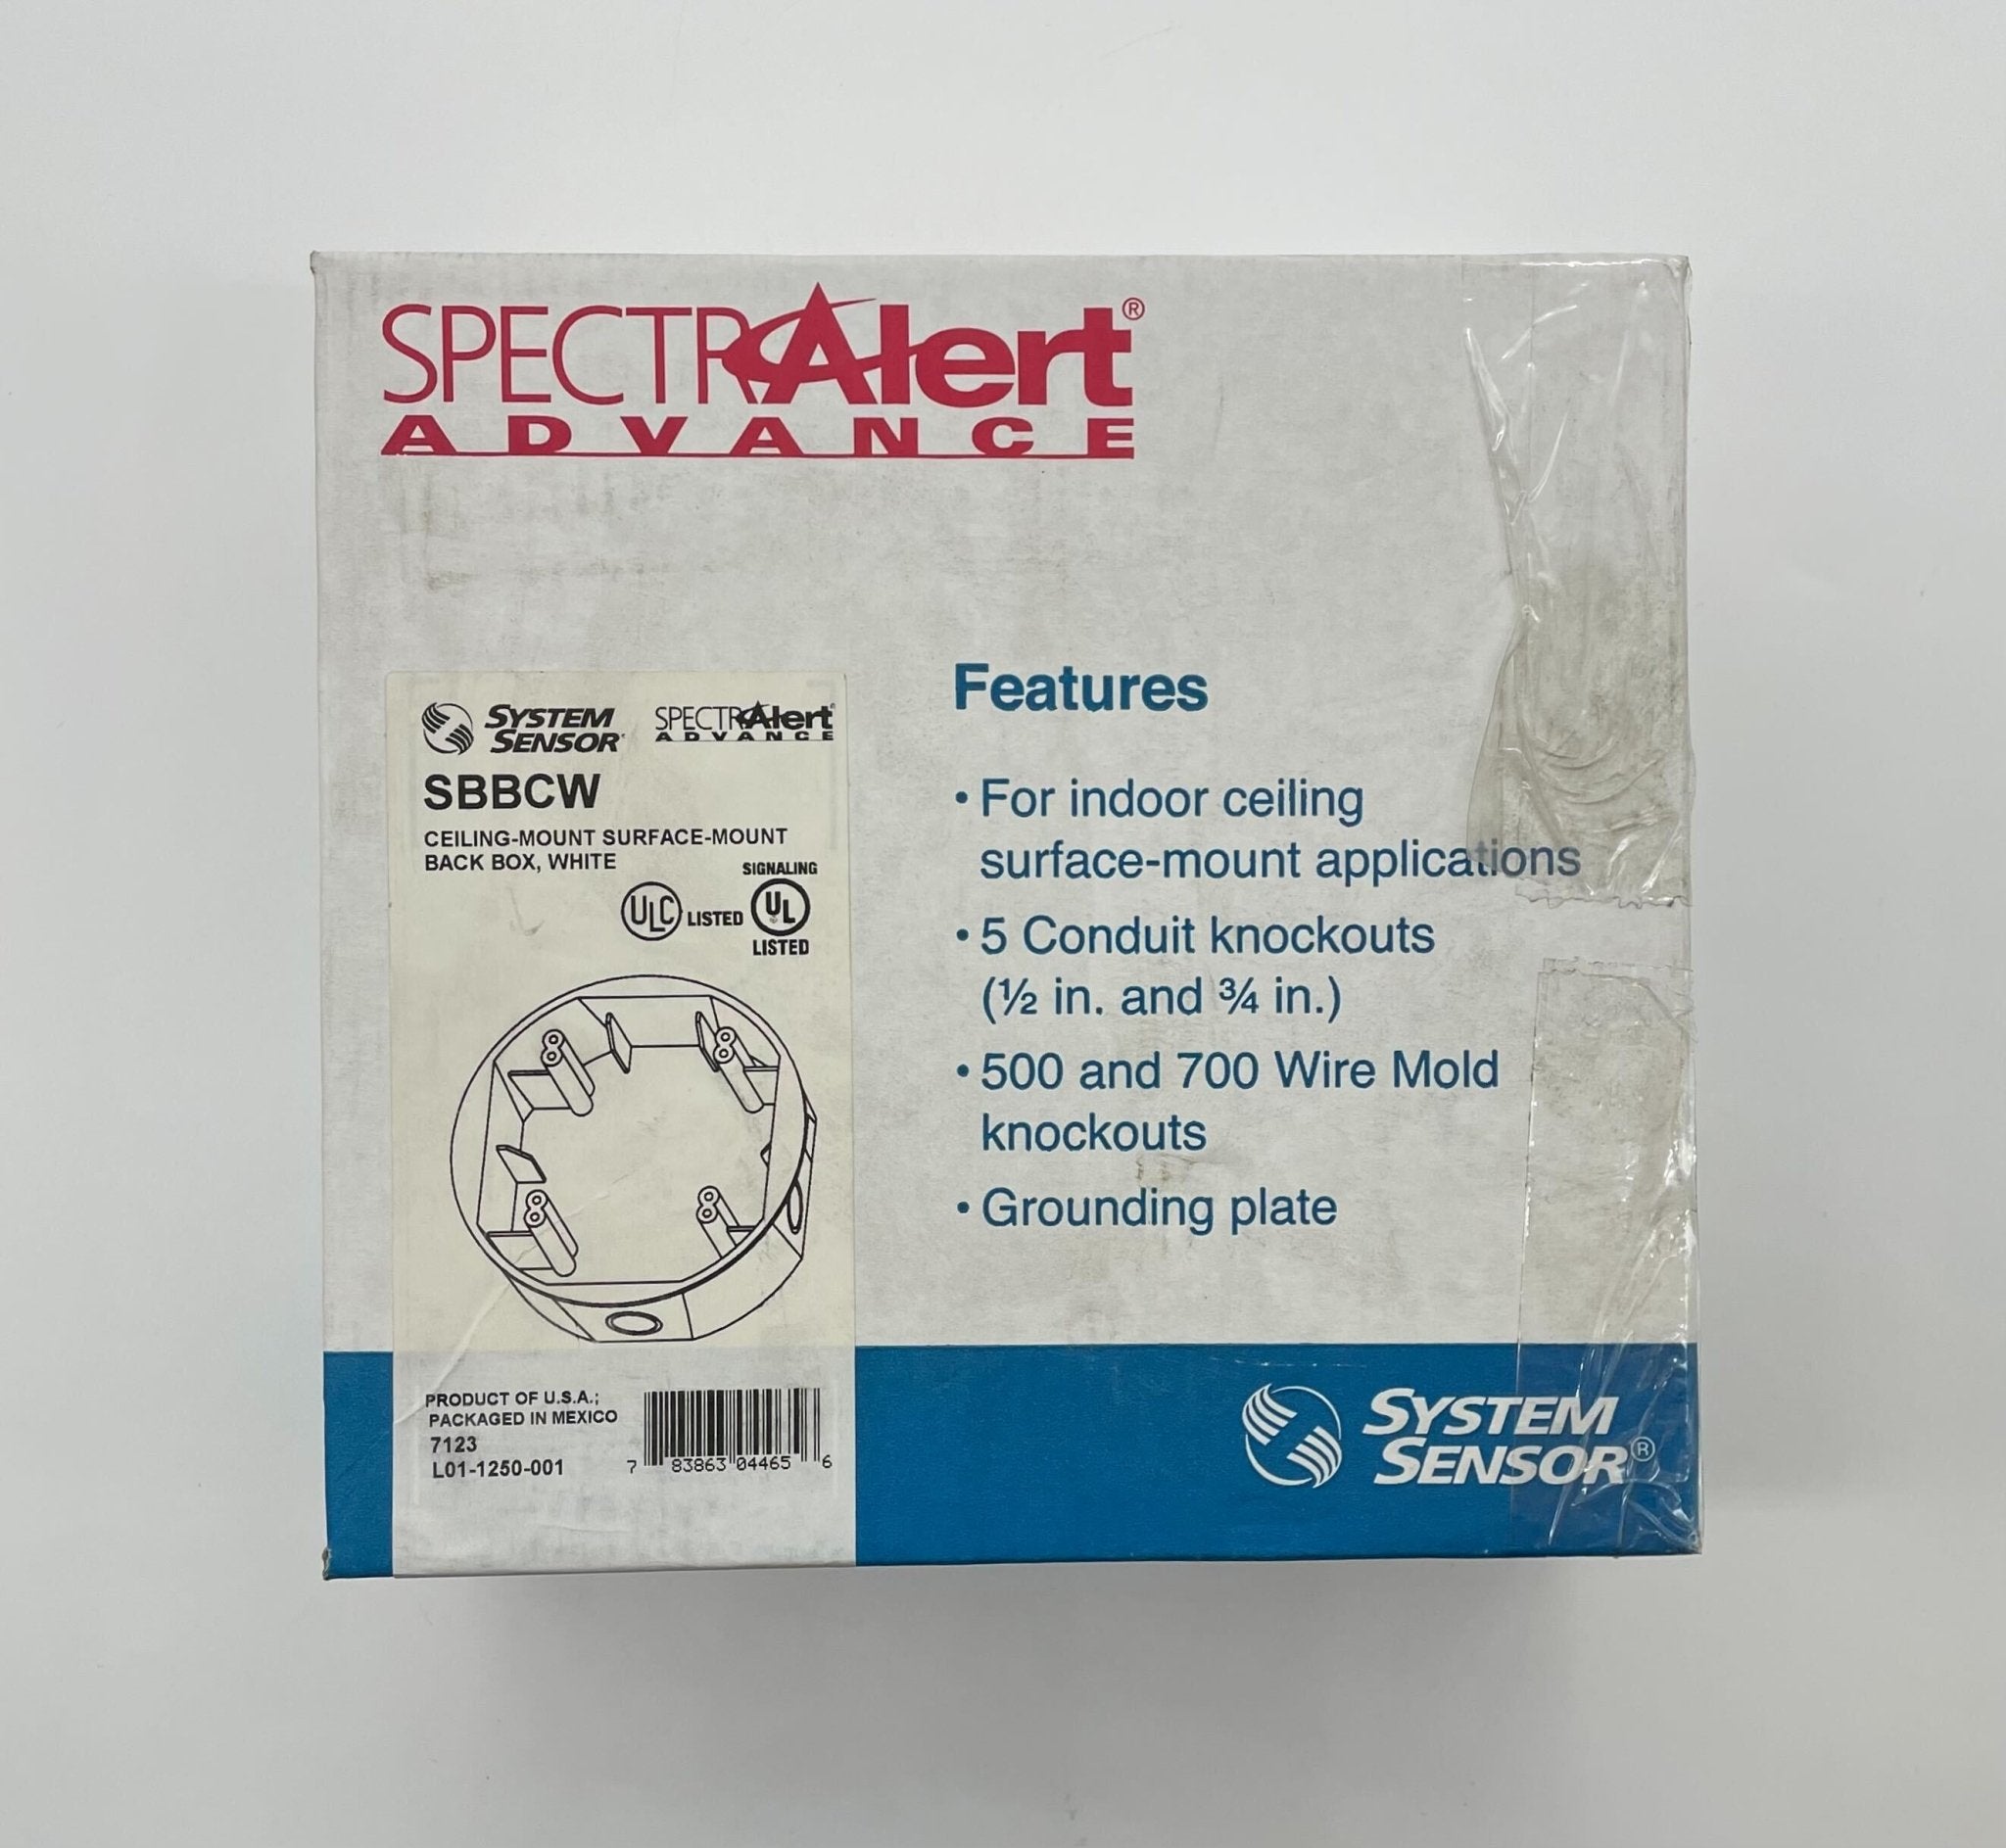 System Sensor SBBCW - The Fire Alarm Supplier